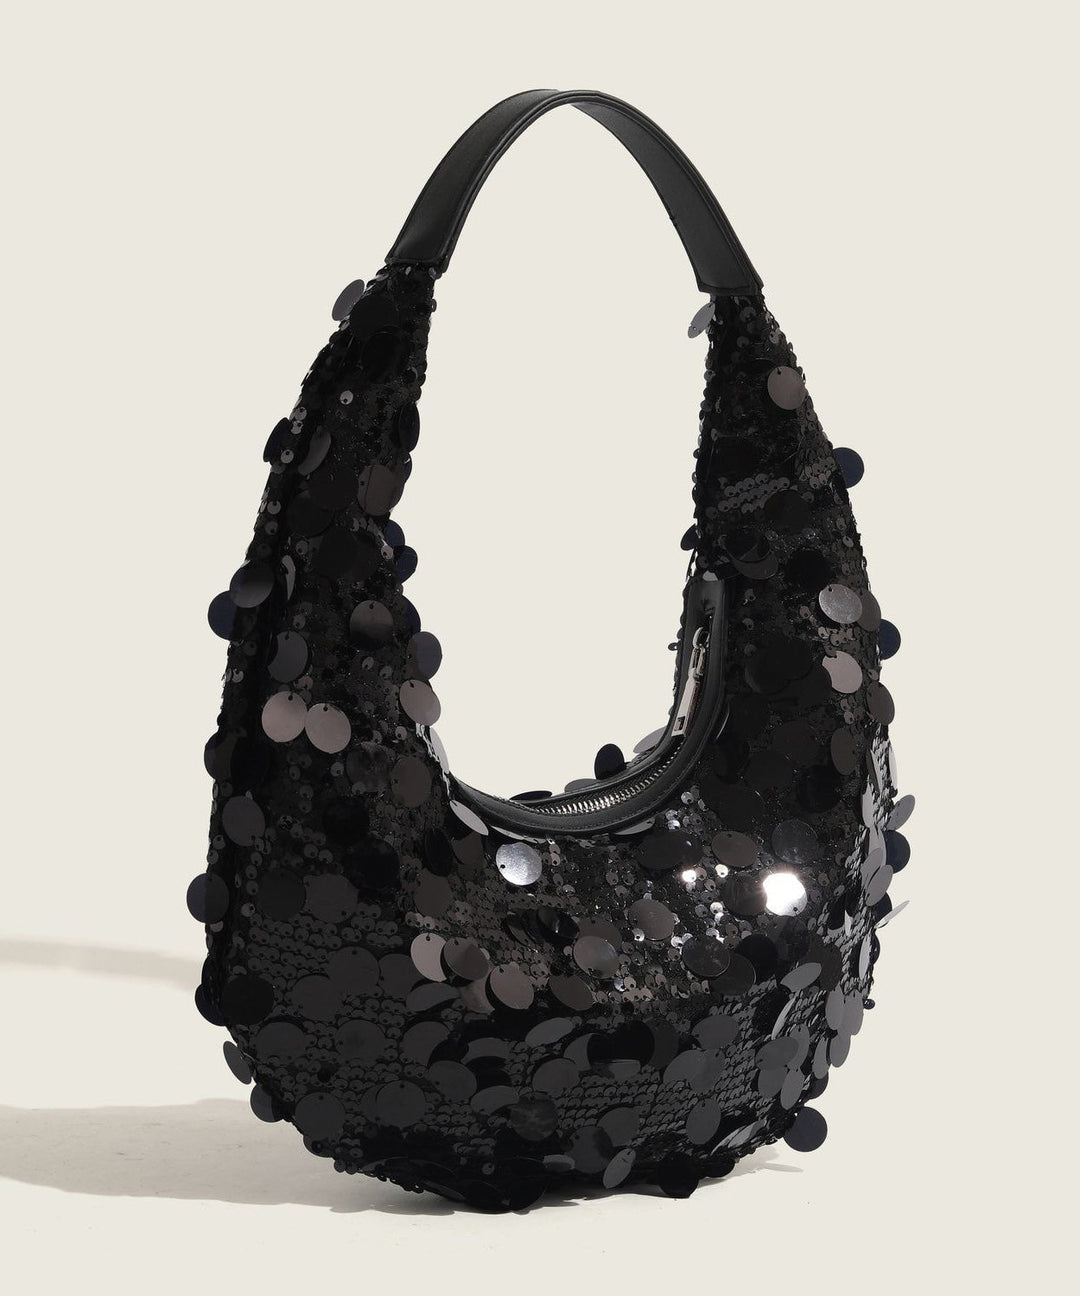 Boutique Black Sequins Party Satchel Bag Handbag